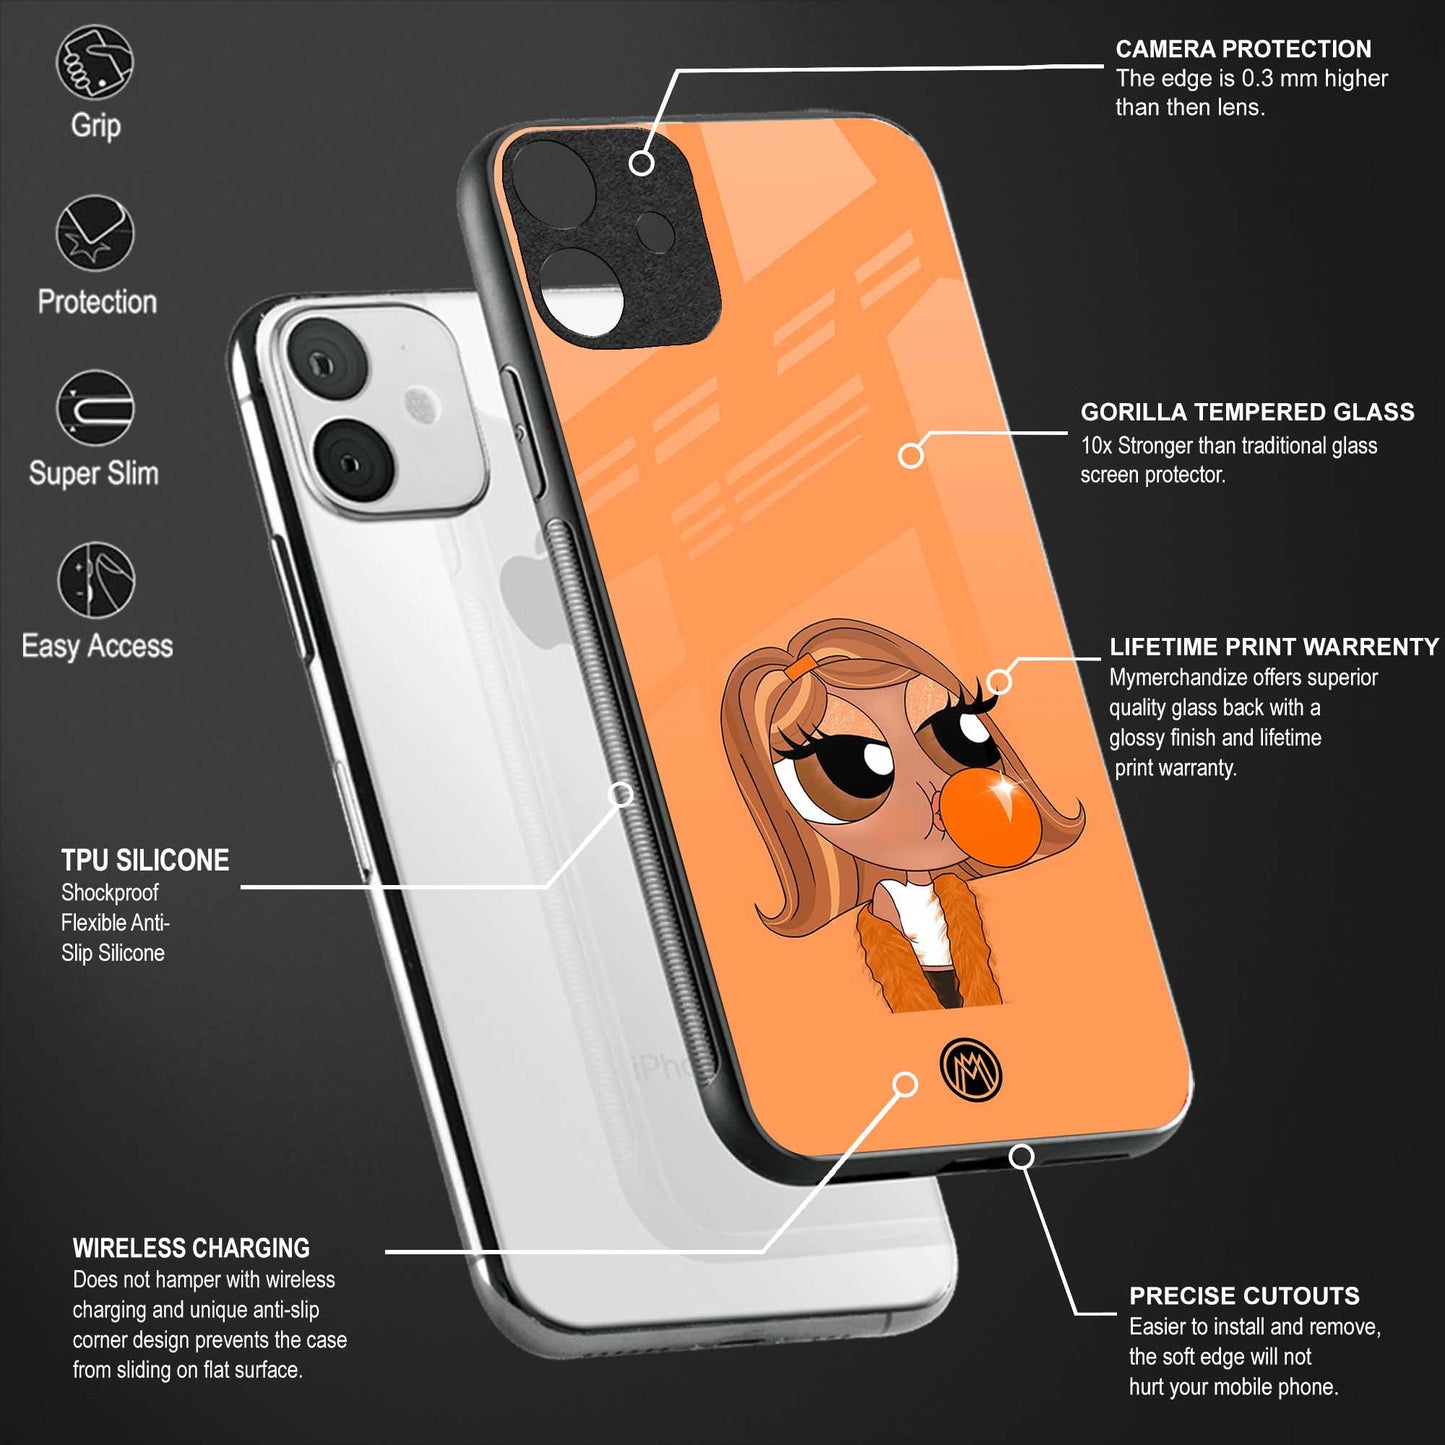 orange tote powerpuff girl back phone cover | glass case for realme 9 pro 5g